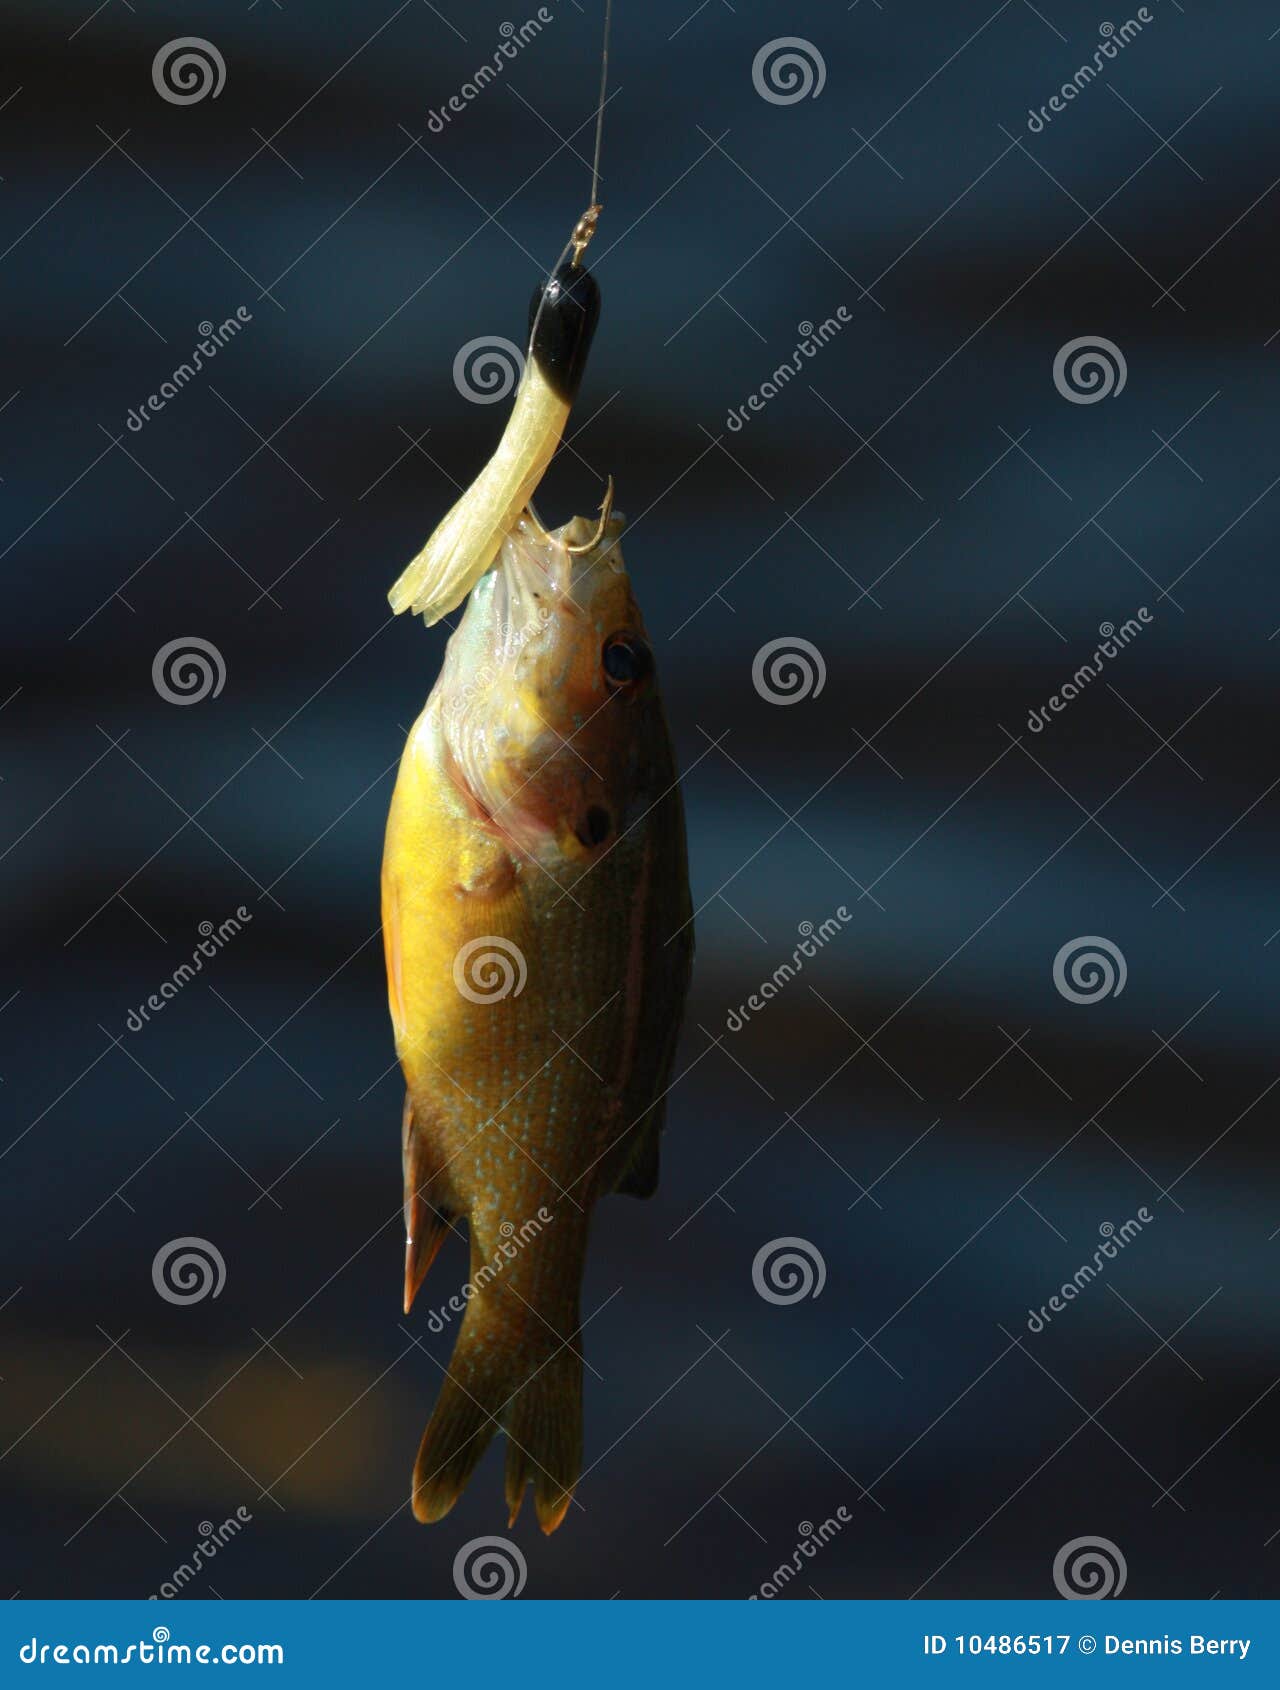 Tiny fish stock image. Image of fish, fishing, tiny, perch - 10486517